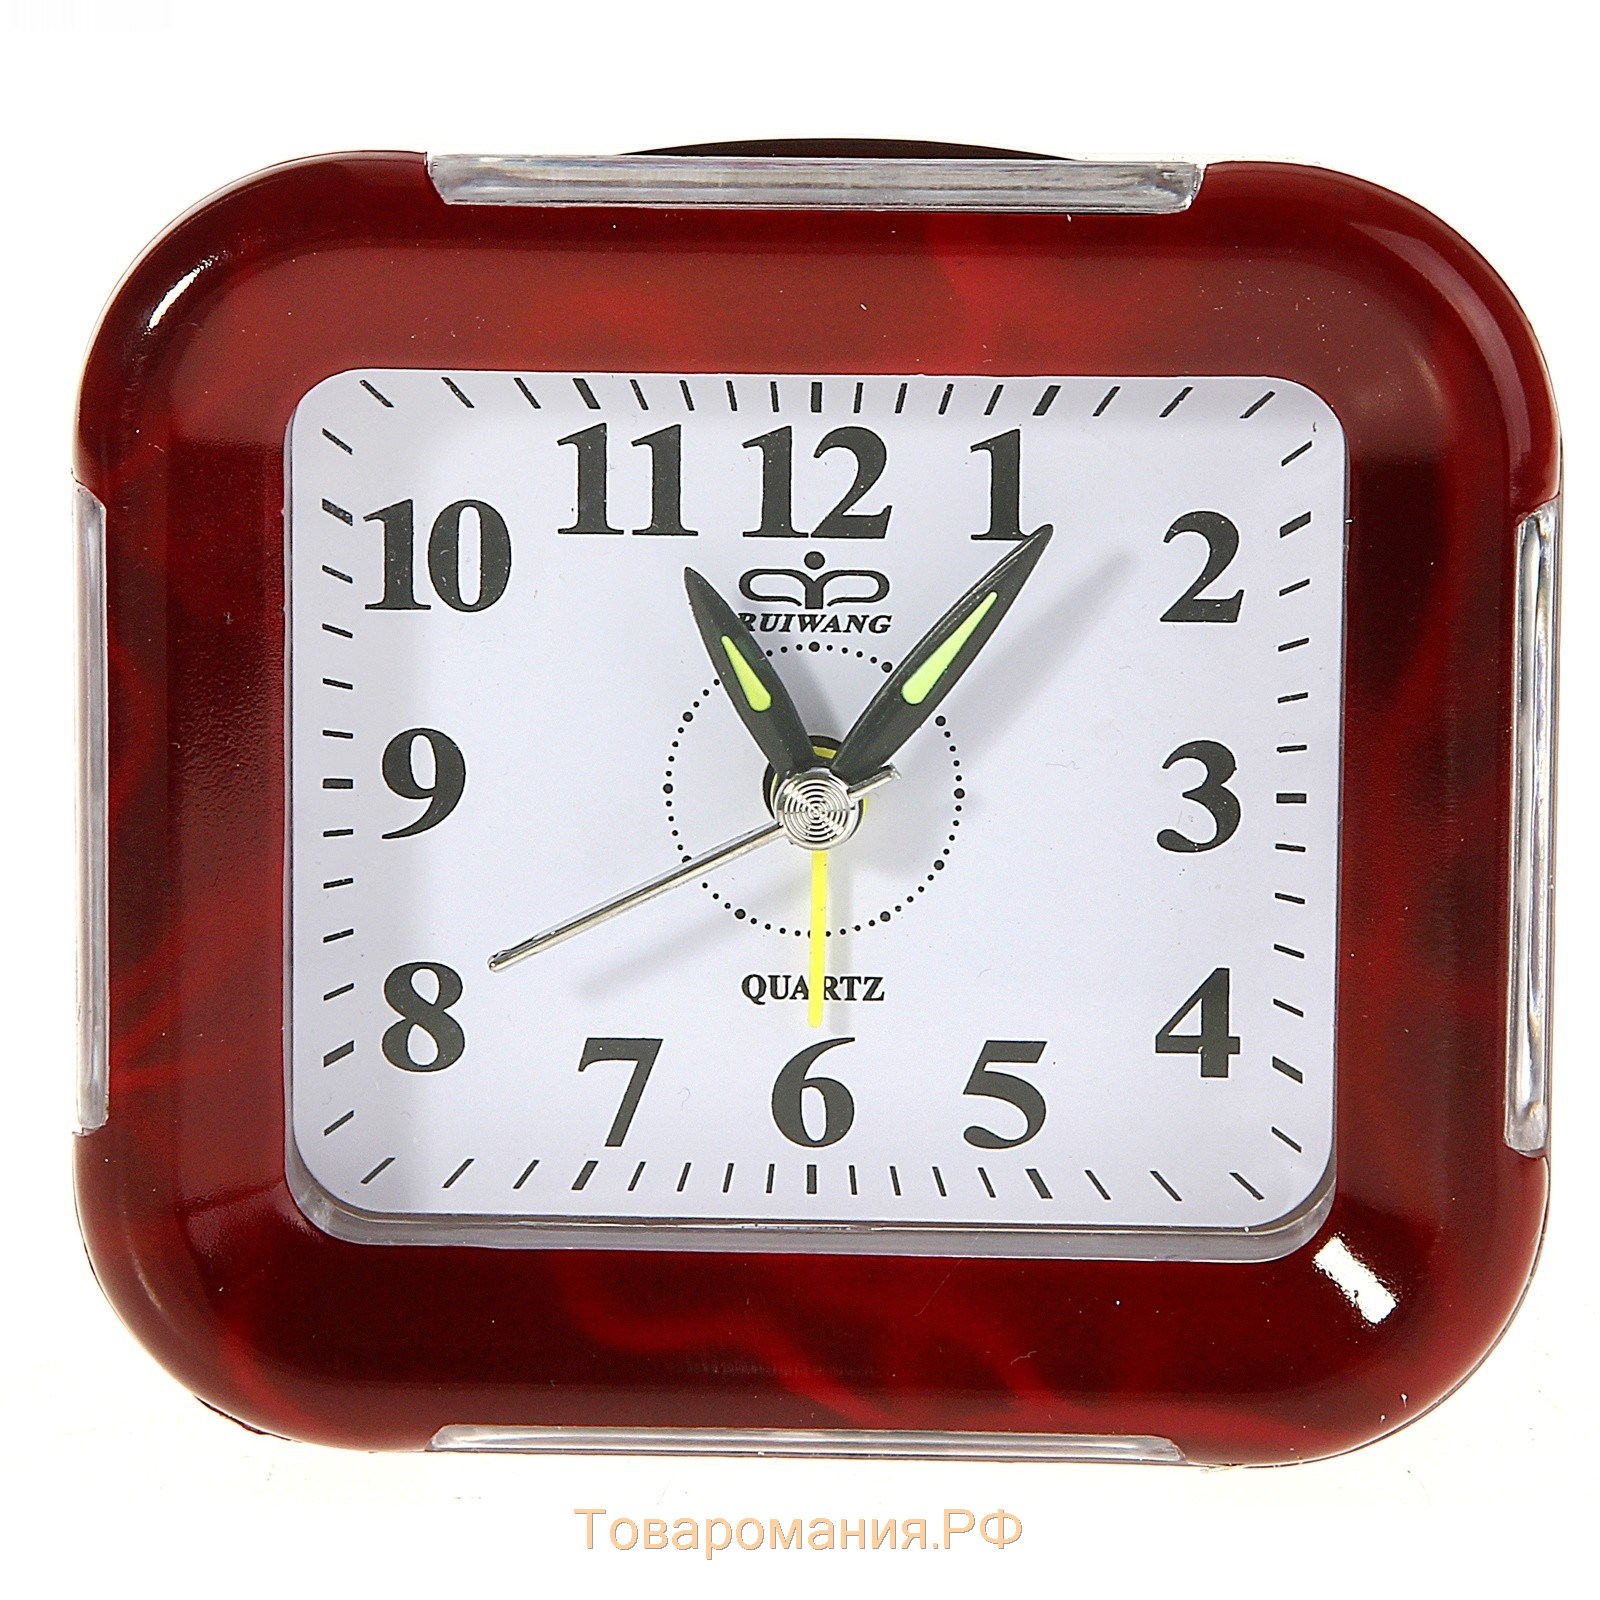 Часы - будильник настольные "Корень вяза", дискретный ход, d-8 см, 8.5 х 10 см, АА